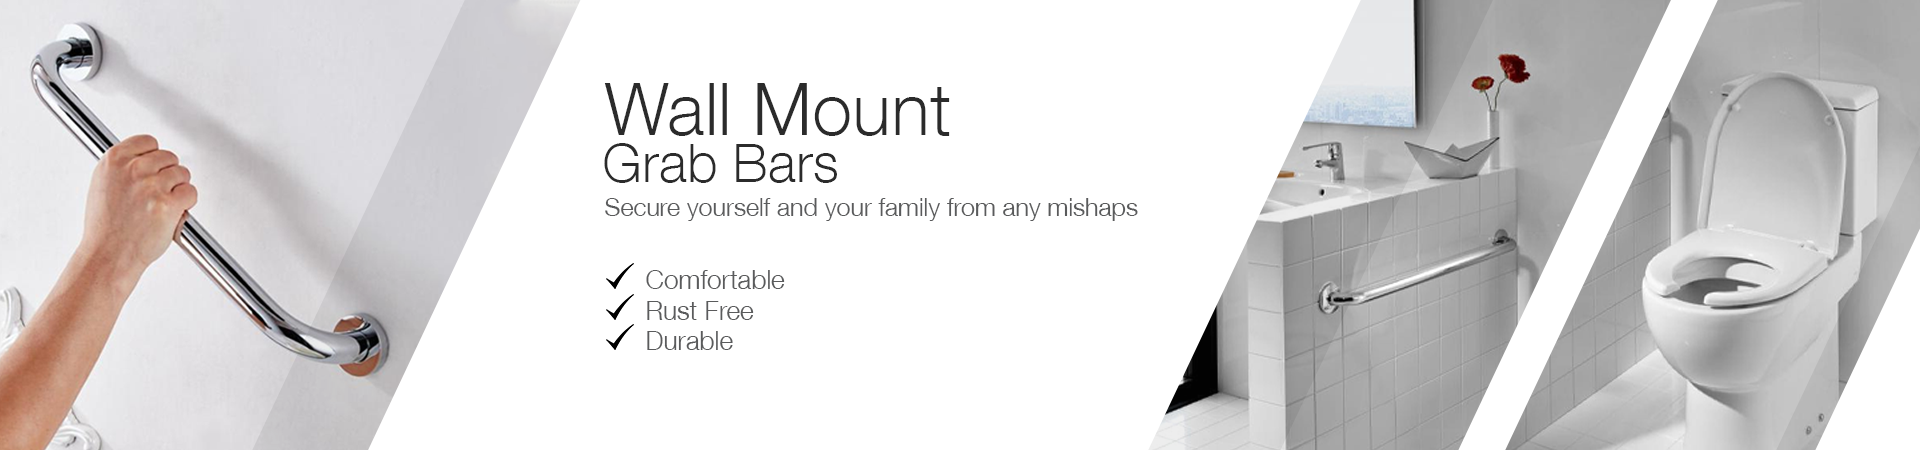 Wall Mount Grab Bars - stainless steel bathroom wall grab bar safety grip handle towel rail shelf